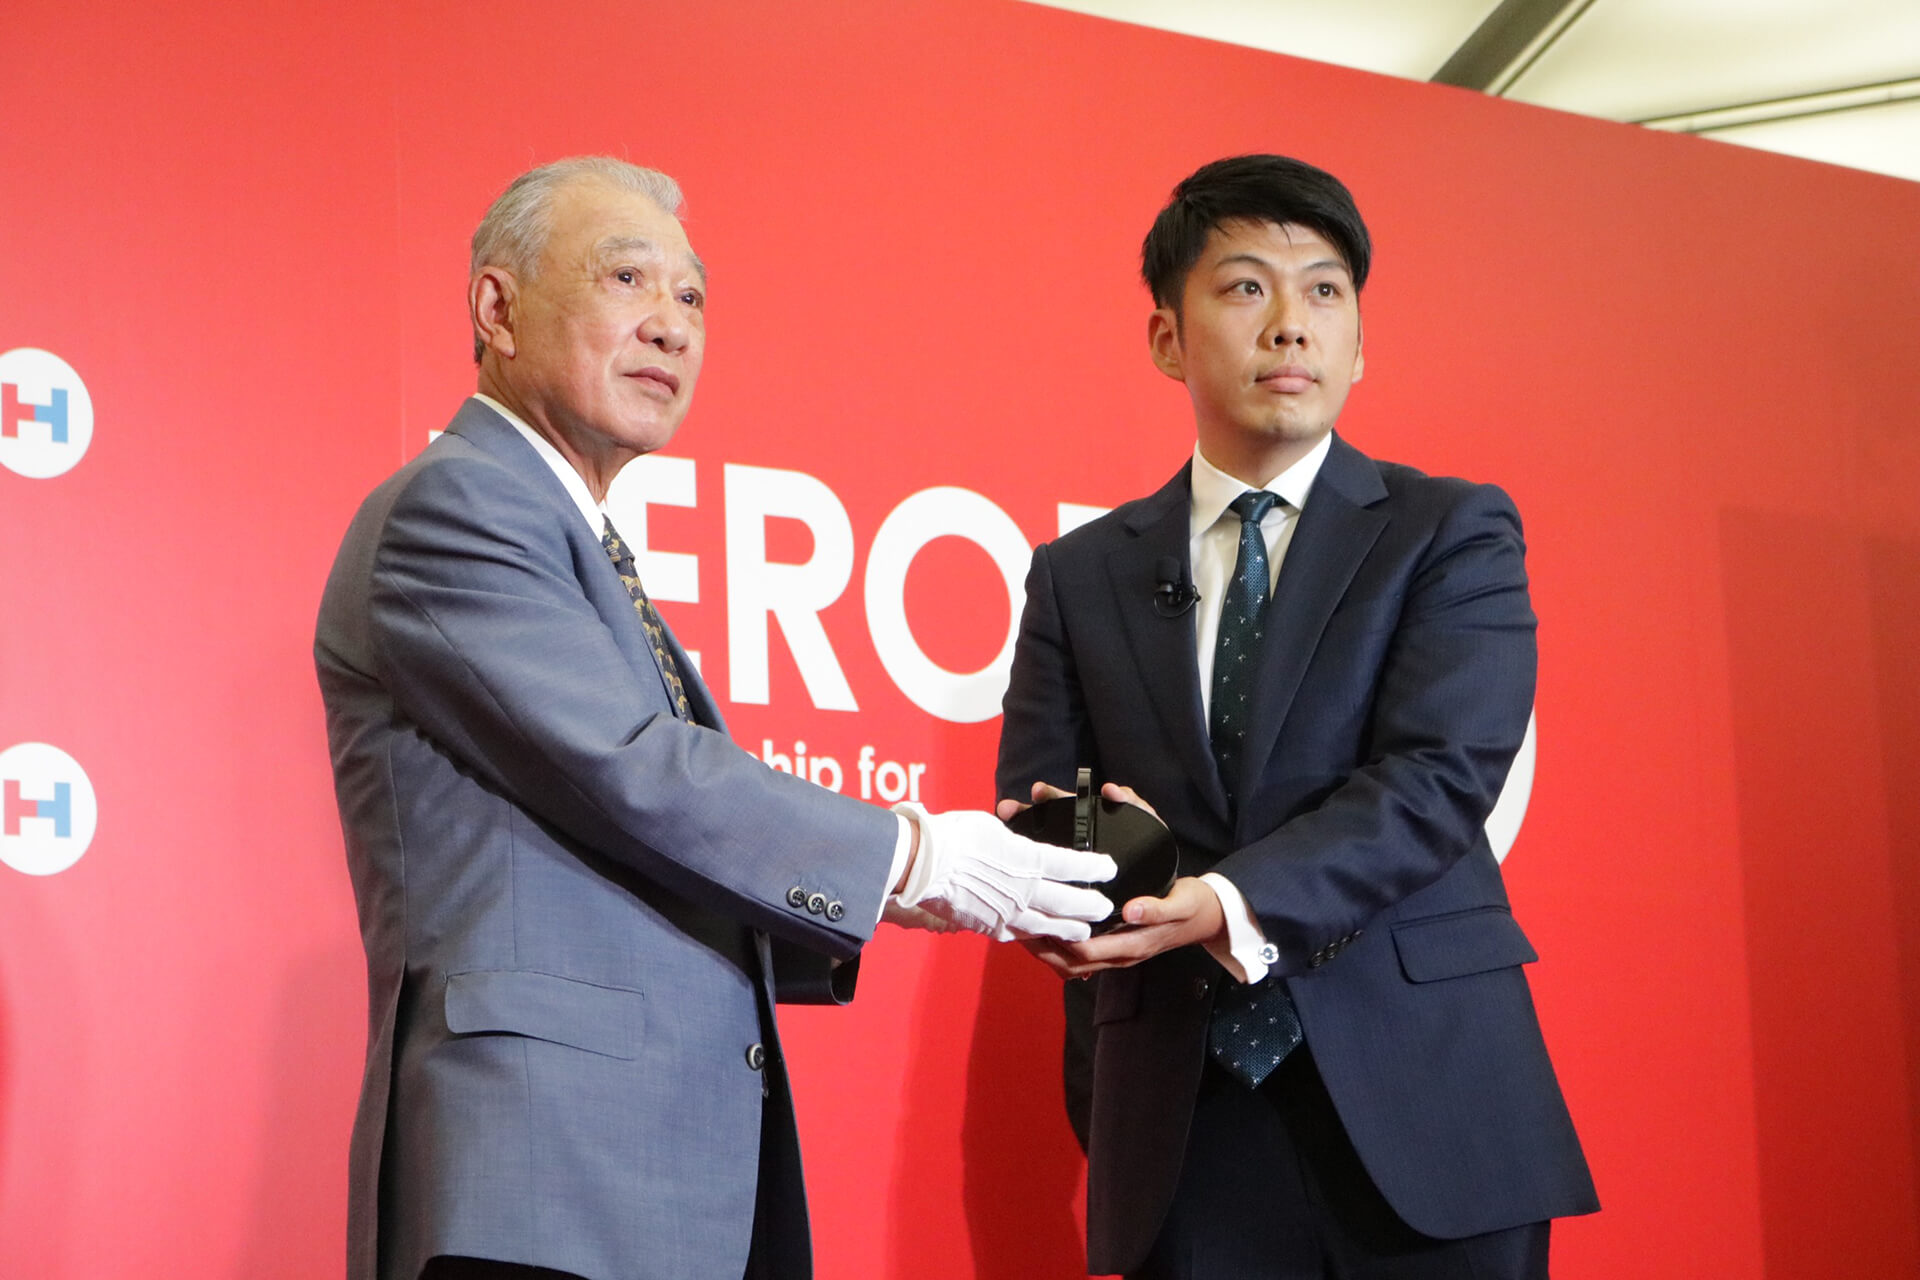 The award was accepted on behalf of Keisuke Honda by Motoki Futamura, project director (on the left is Nippon Foundation Chairman Sasakawa)